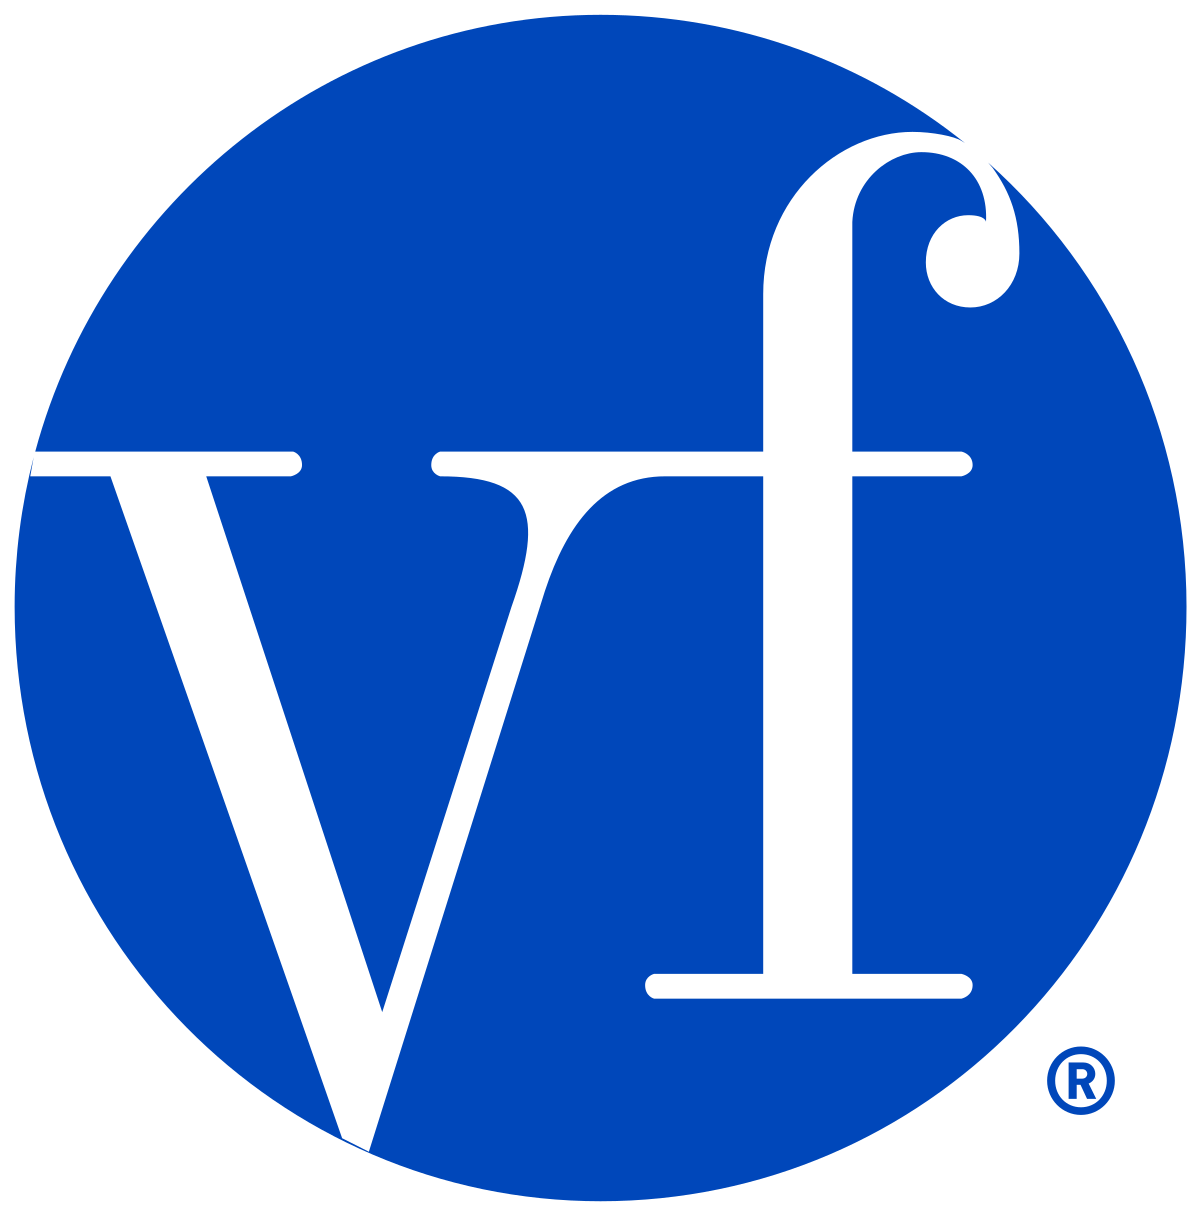 Italian Sports Goods Manufacturers Logo - VF Corporation